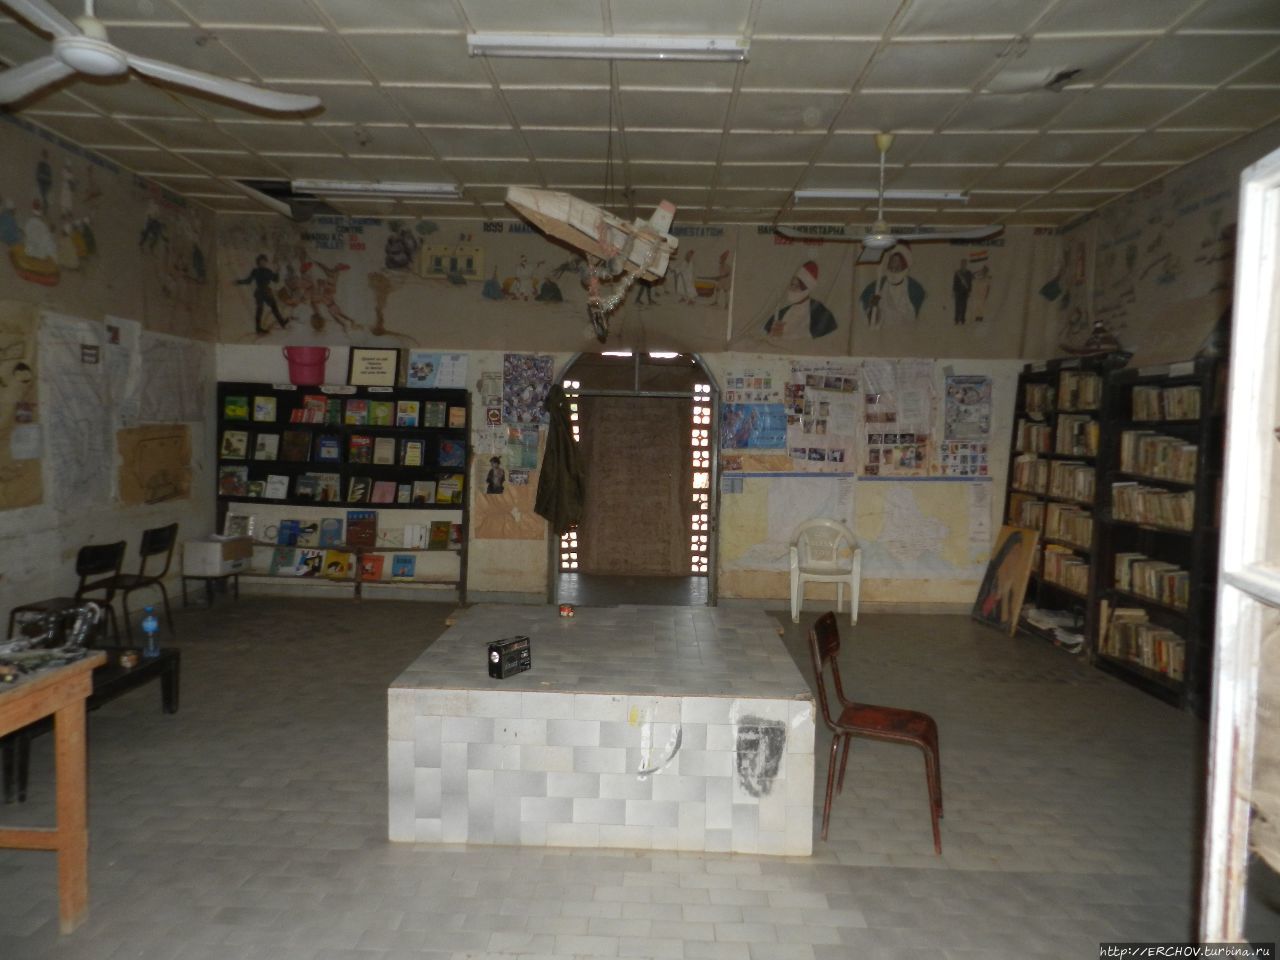 Нигер. Ч — 24. Квартал Зенгу. Посещение музея-библиотеки Зиндер, Нигер